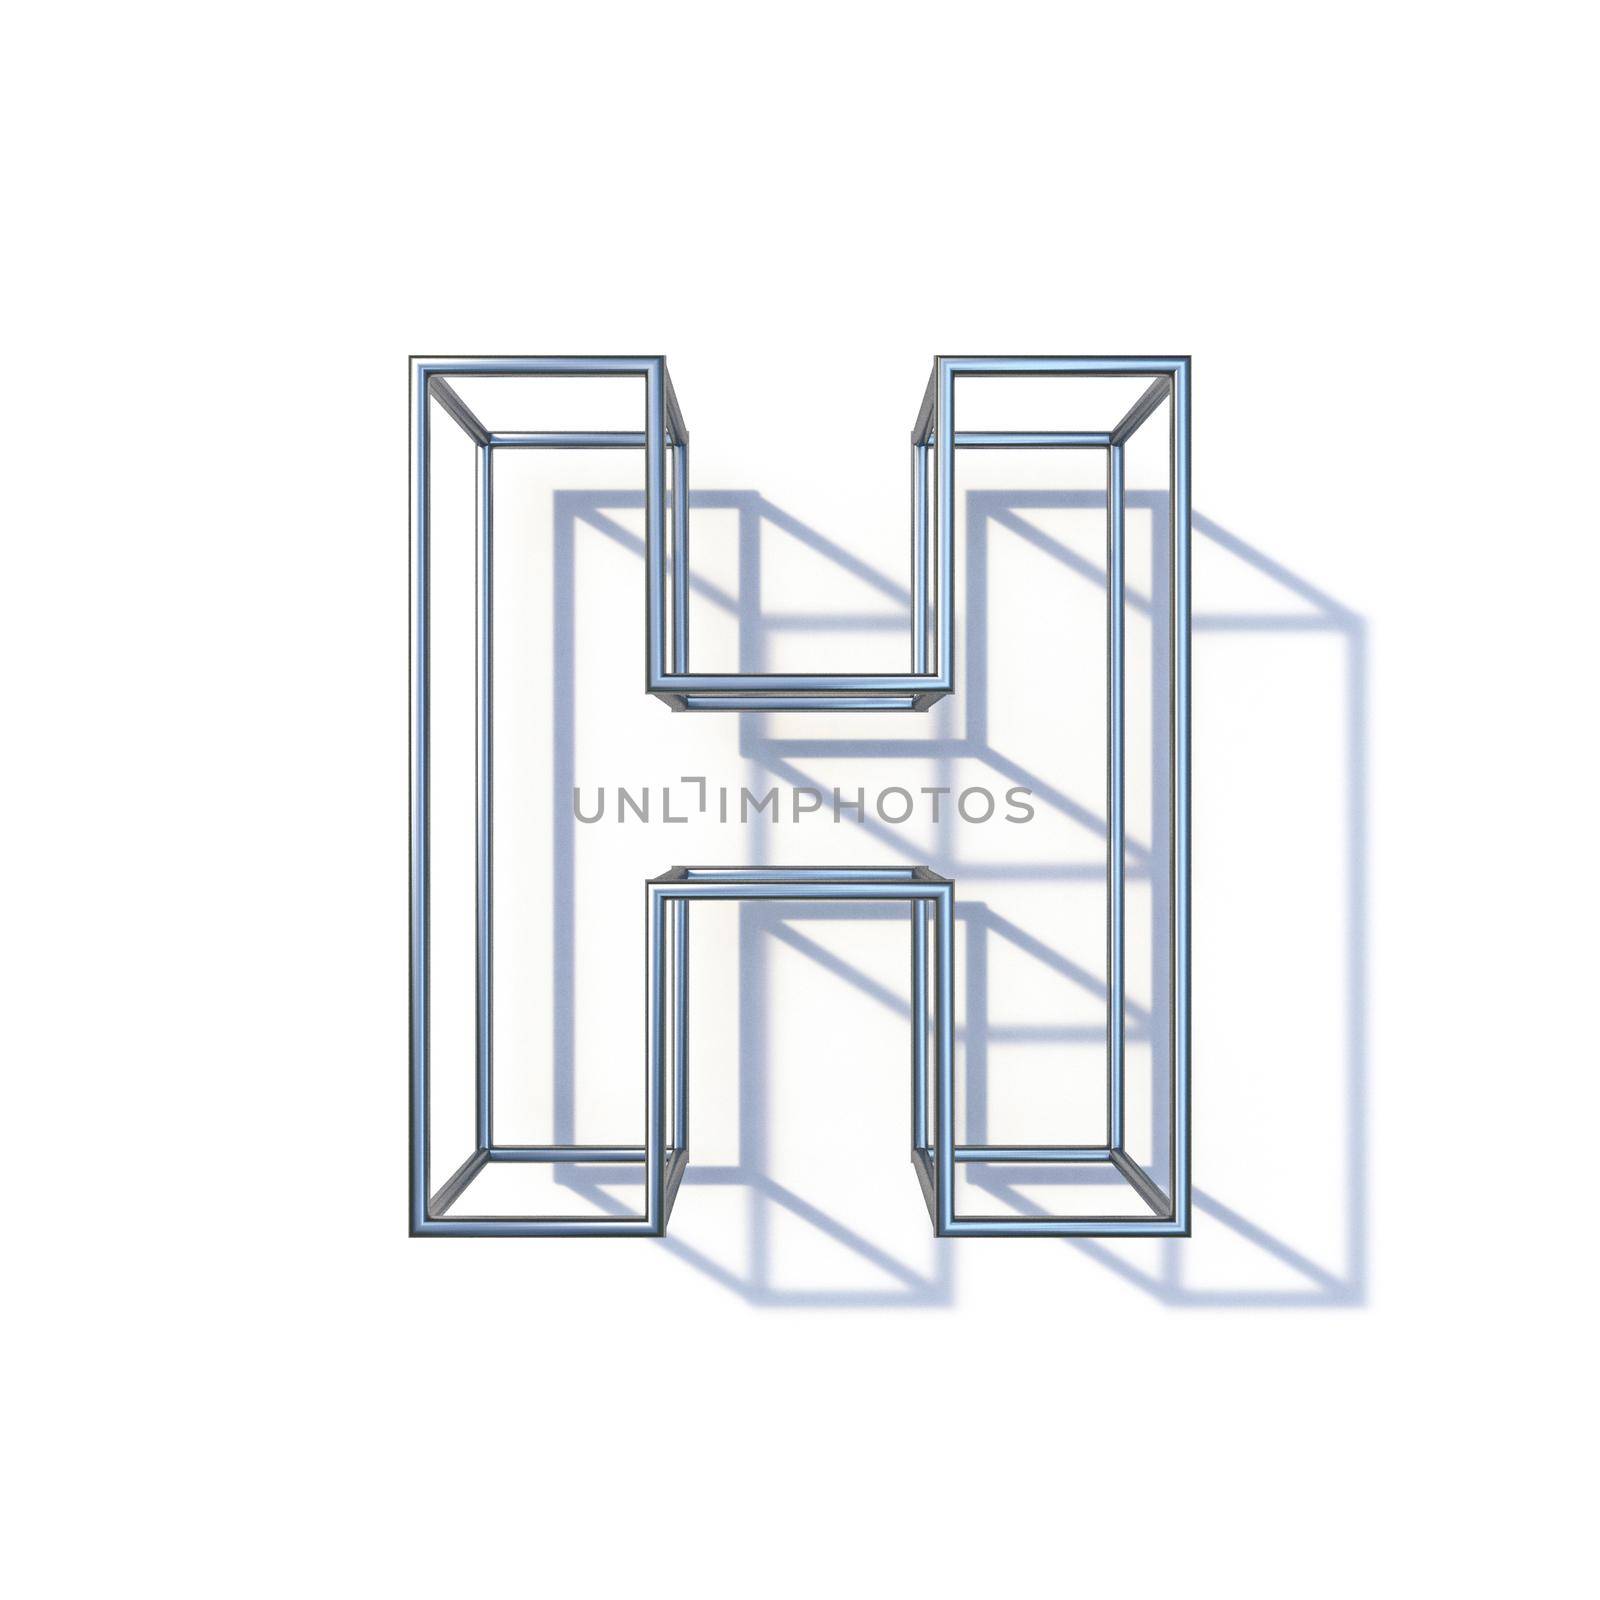 Steel wire frame font Letter H 3D render illustration isolated on white background